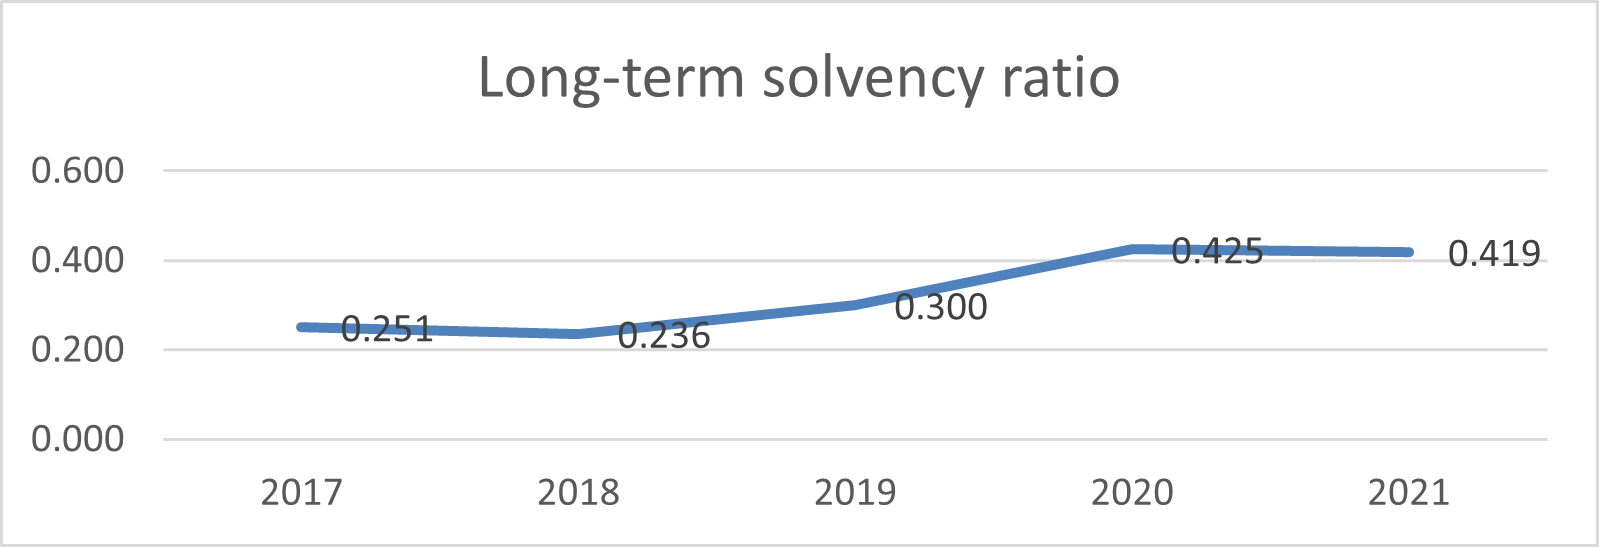 long term solvency ratio graph 